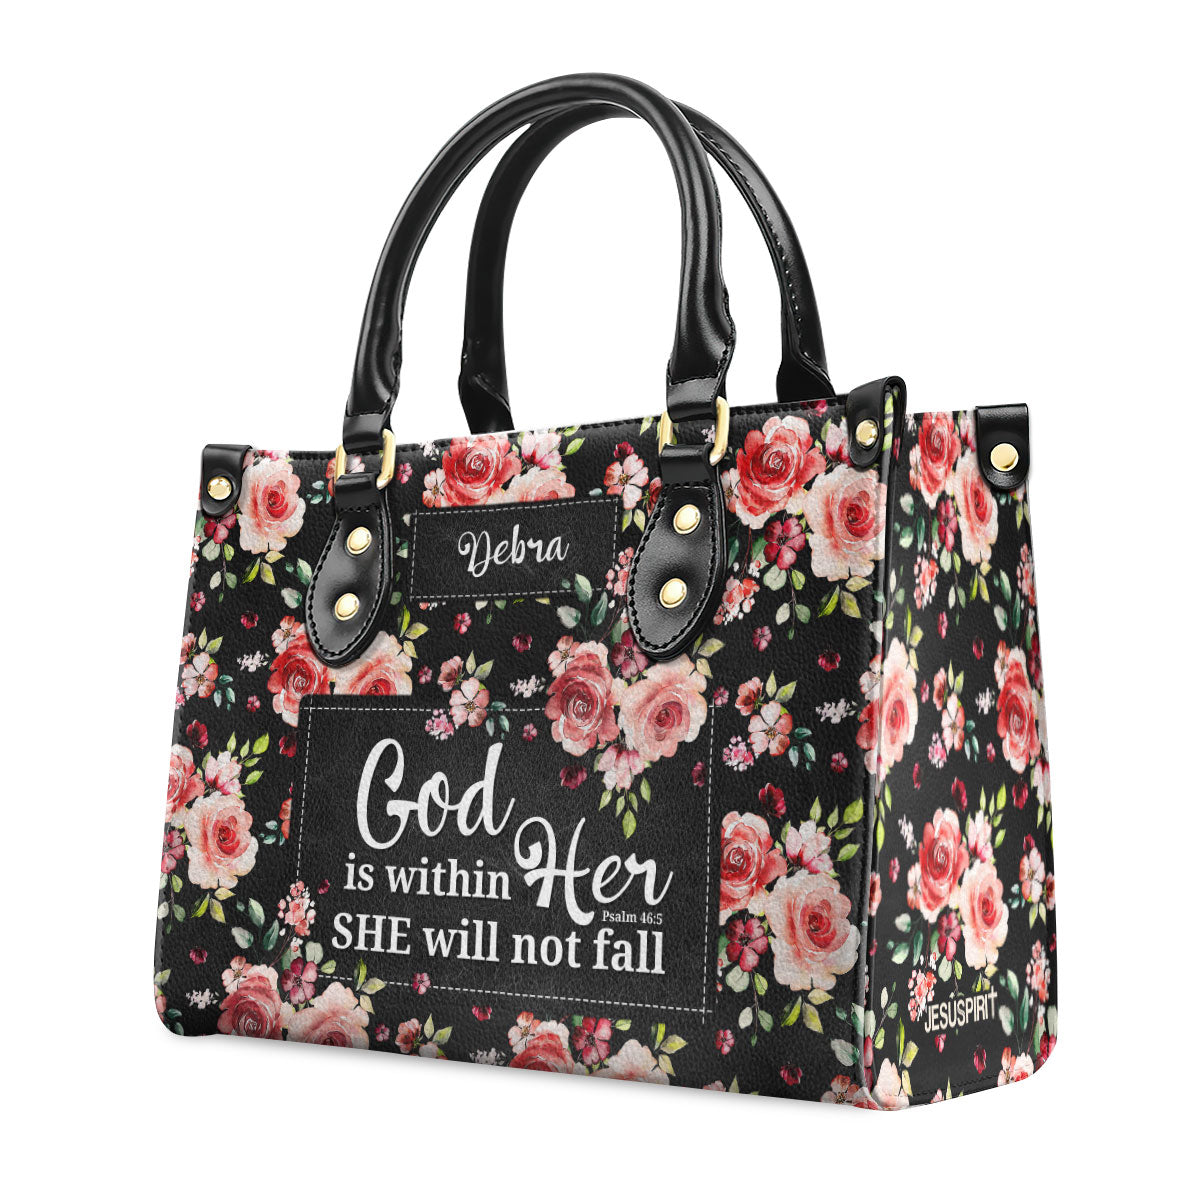 Jesuspirit | Spiritual Gift For Christian Ladies | Psalm 46:5 | God Is